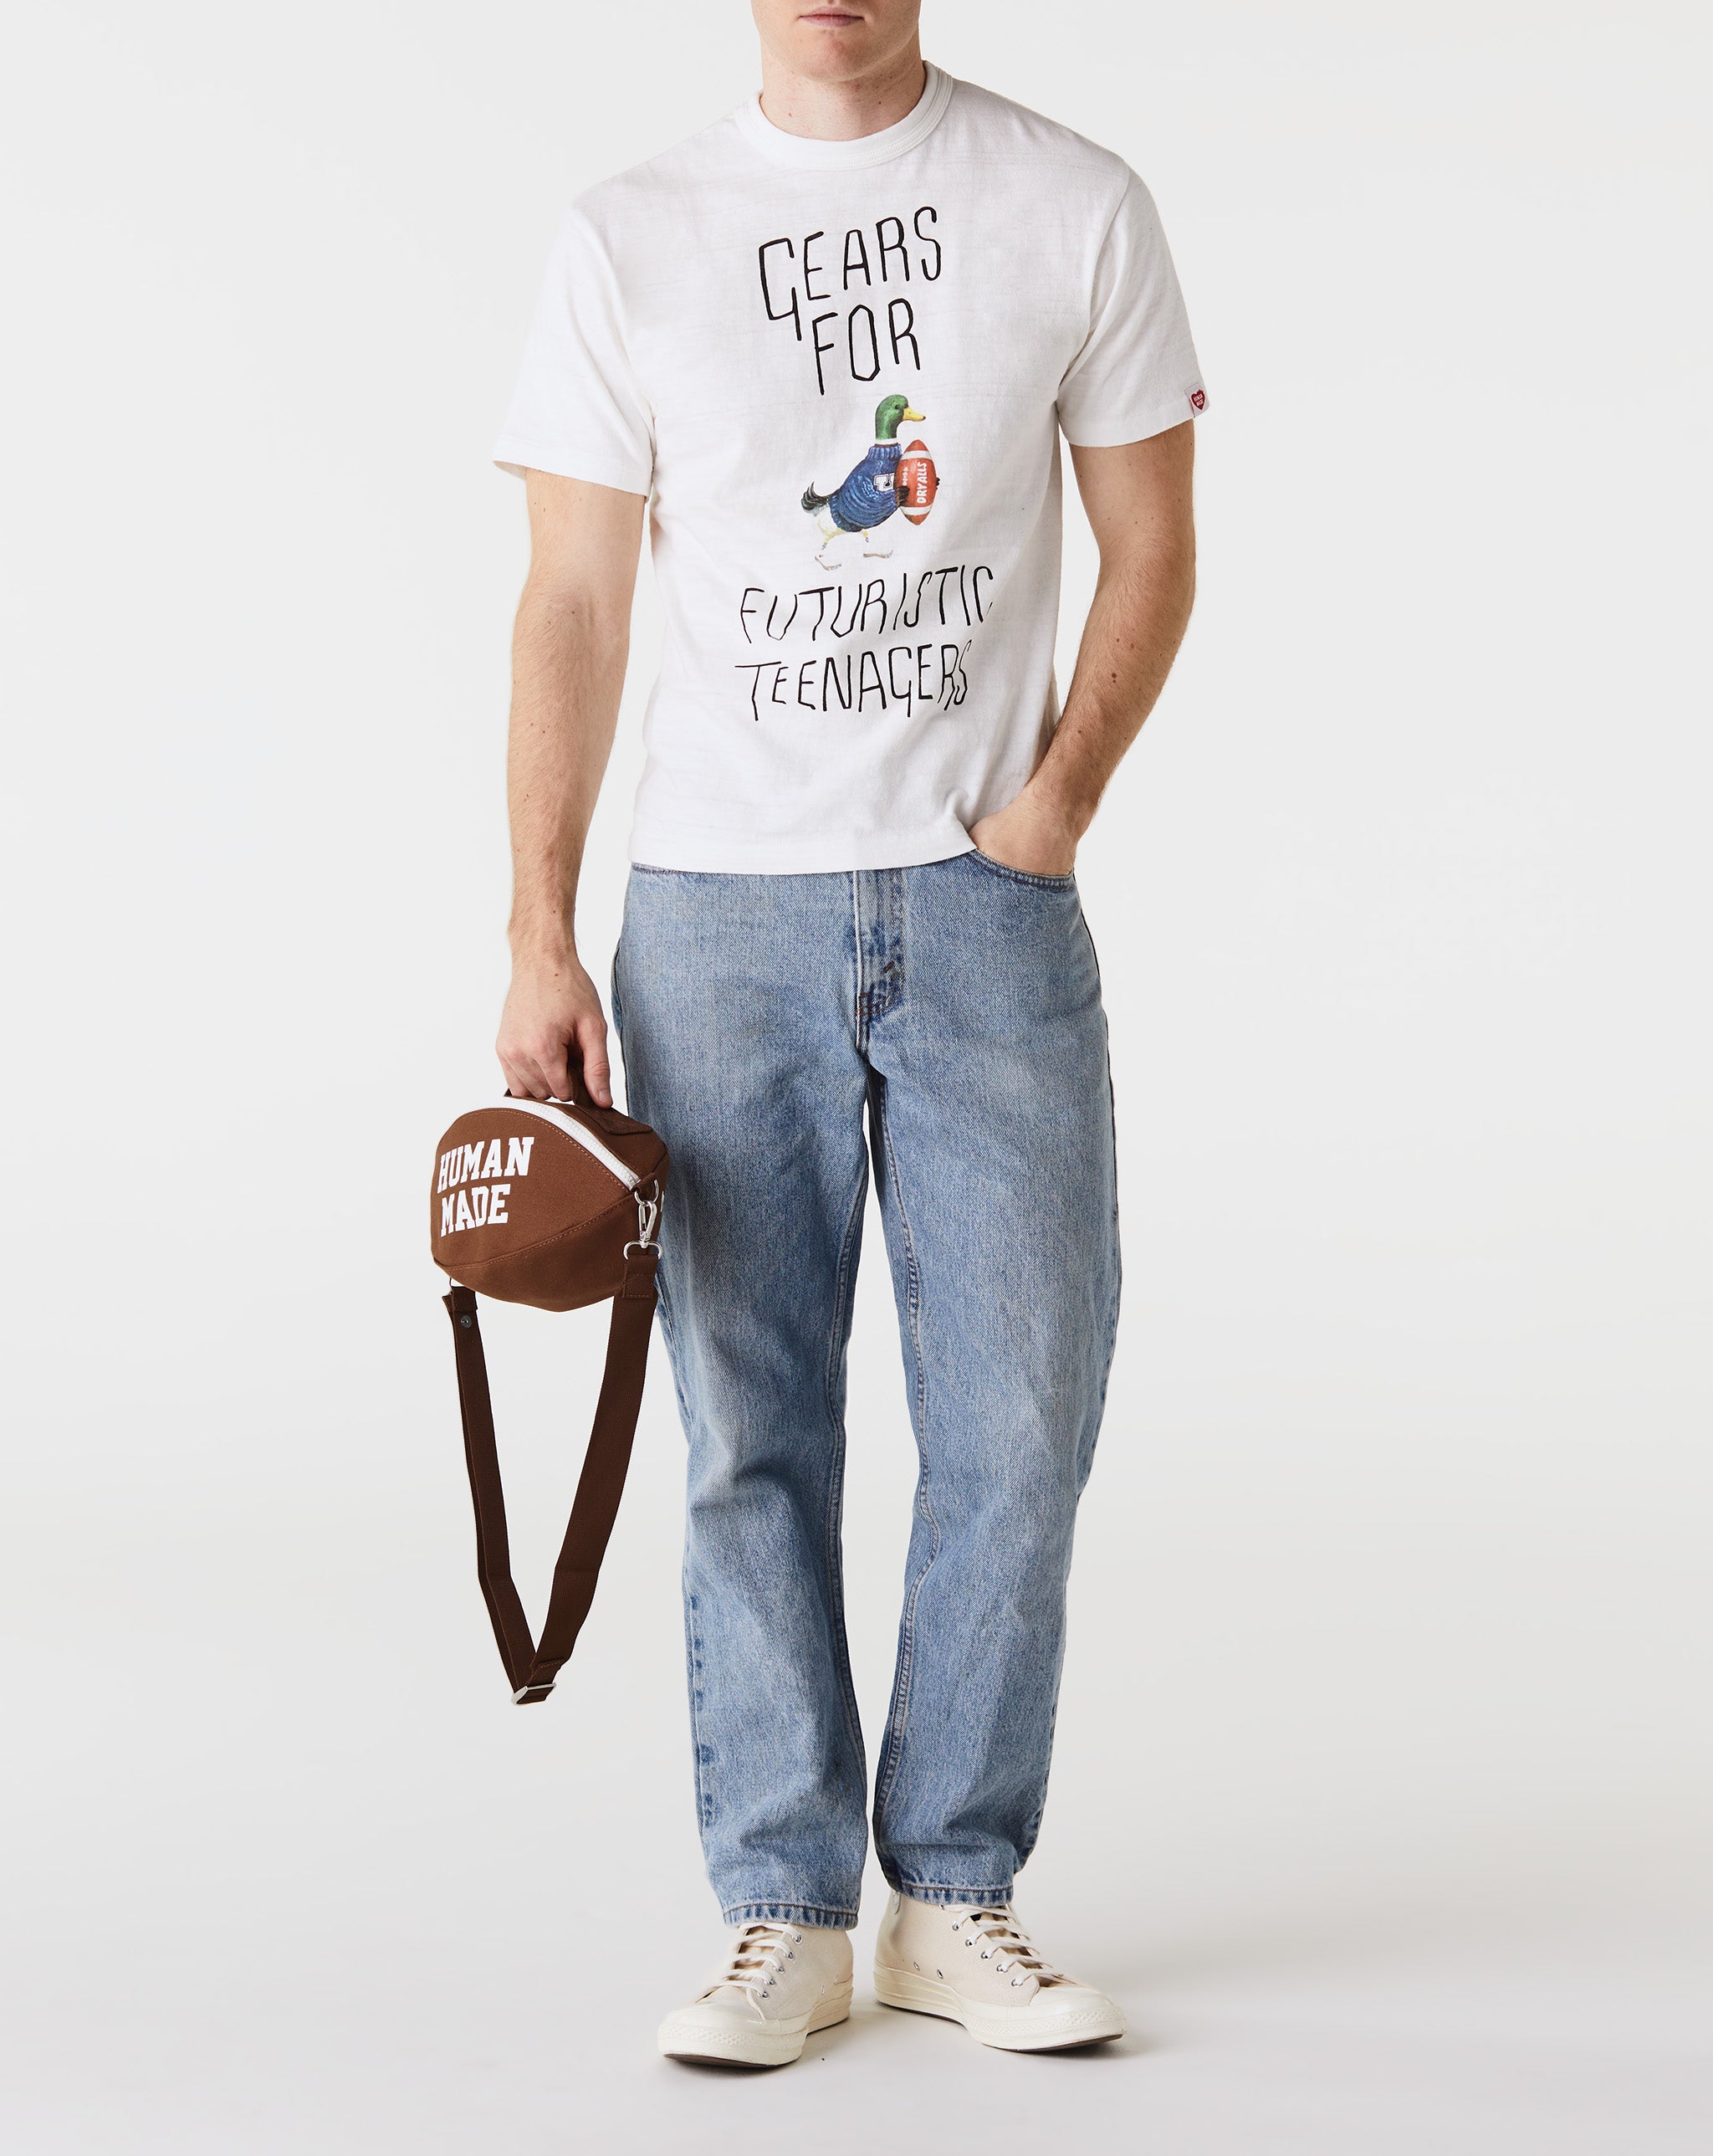 Human Made One Point T-Shirt  - Cheap Cerbe Jordan outlet